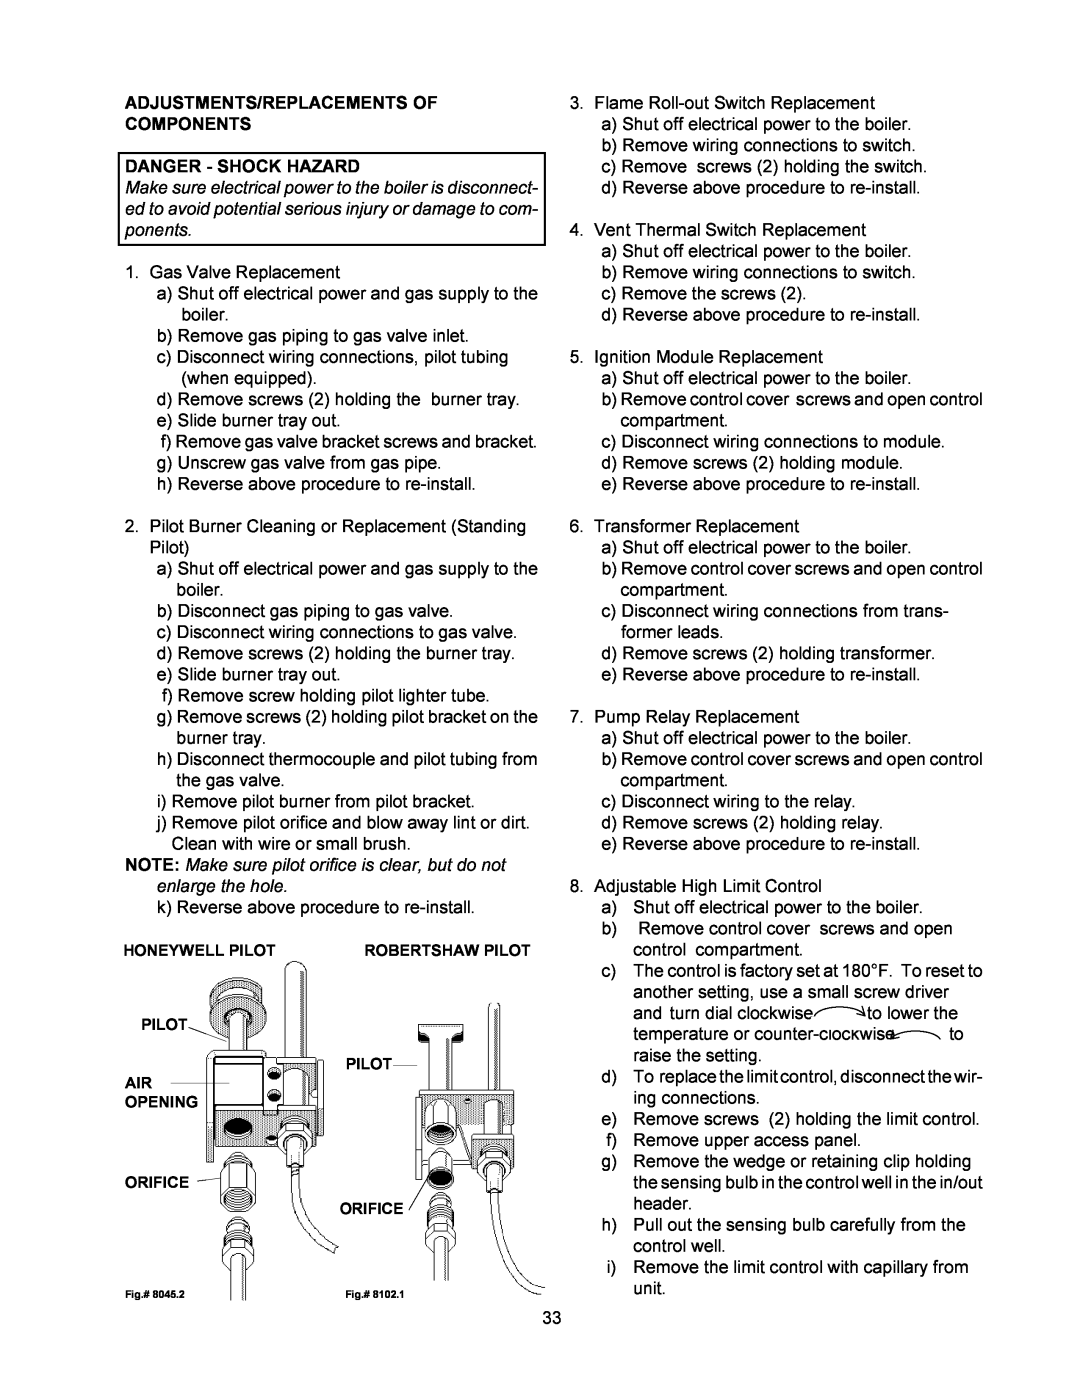 Raypak 0090B 0135B installation instructions Adjustments/Replacements Of Components, Danger - Shock Hazard 